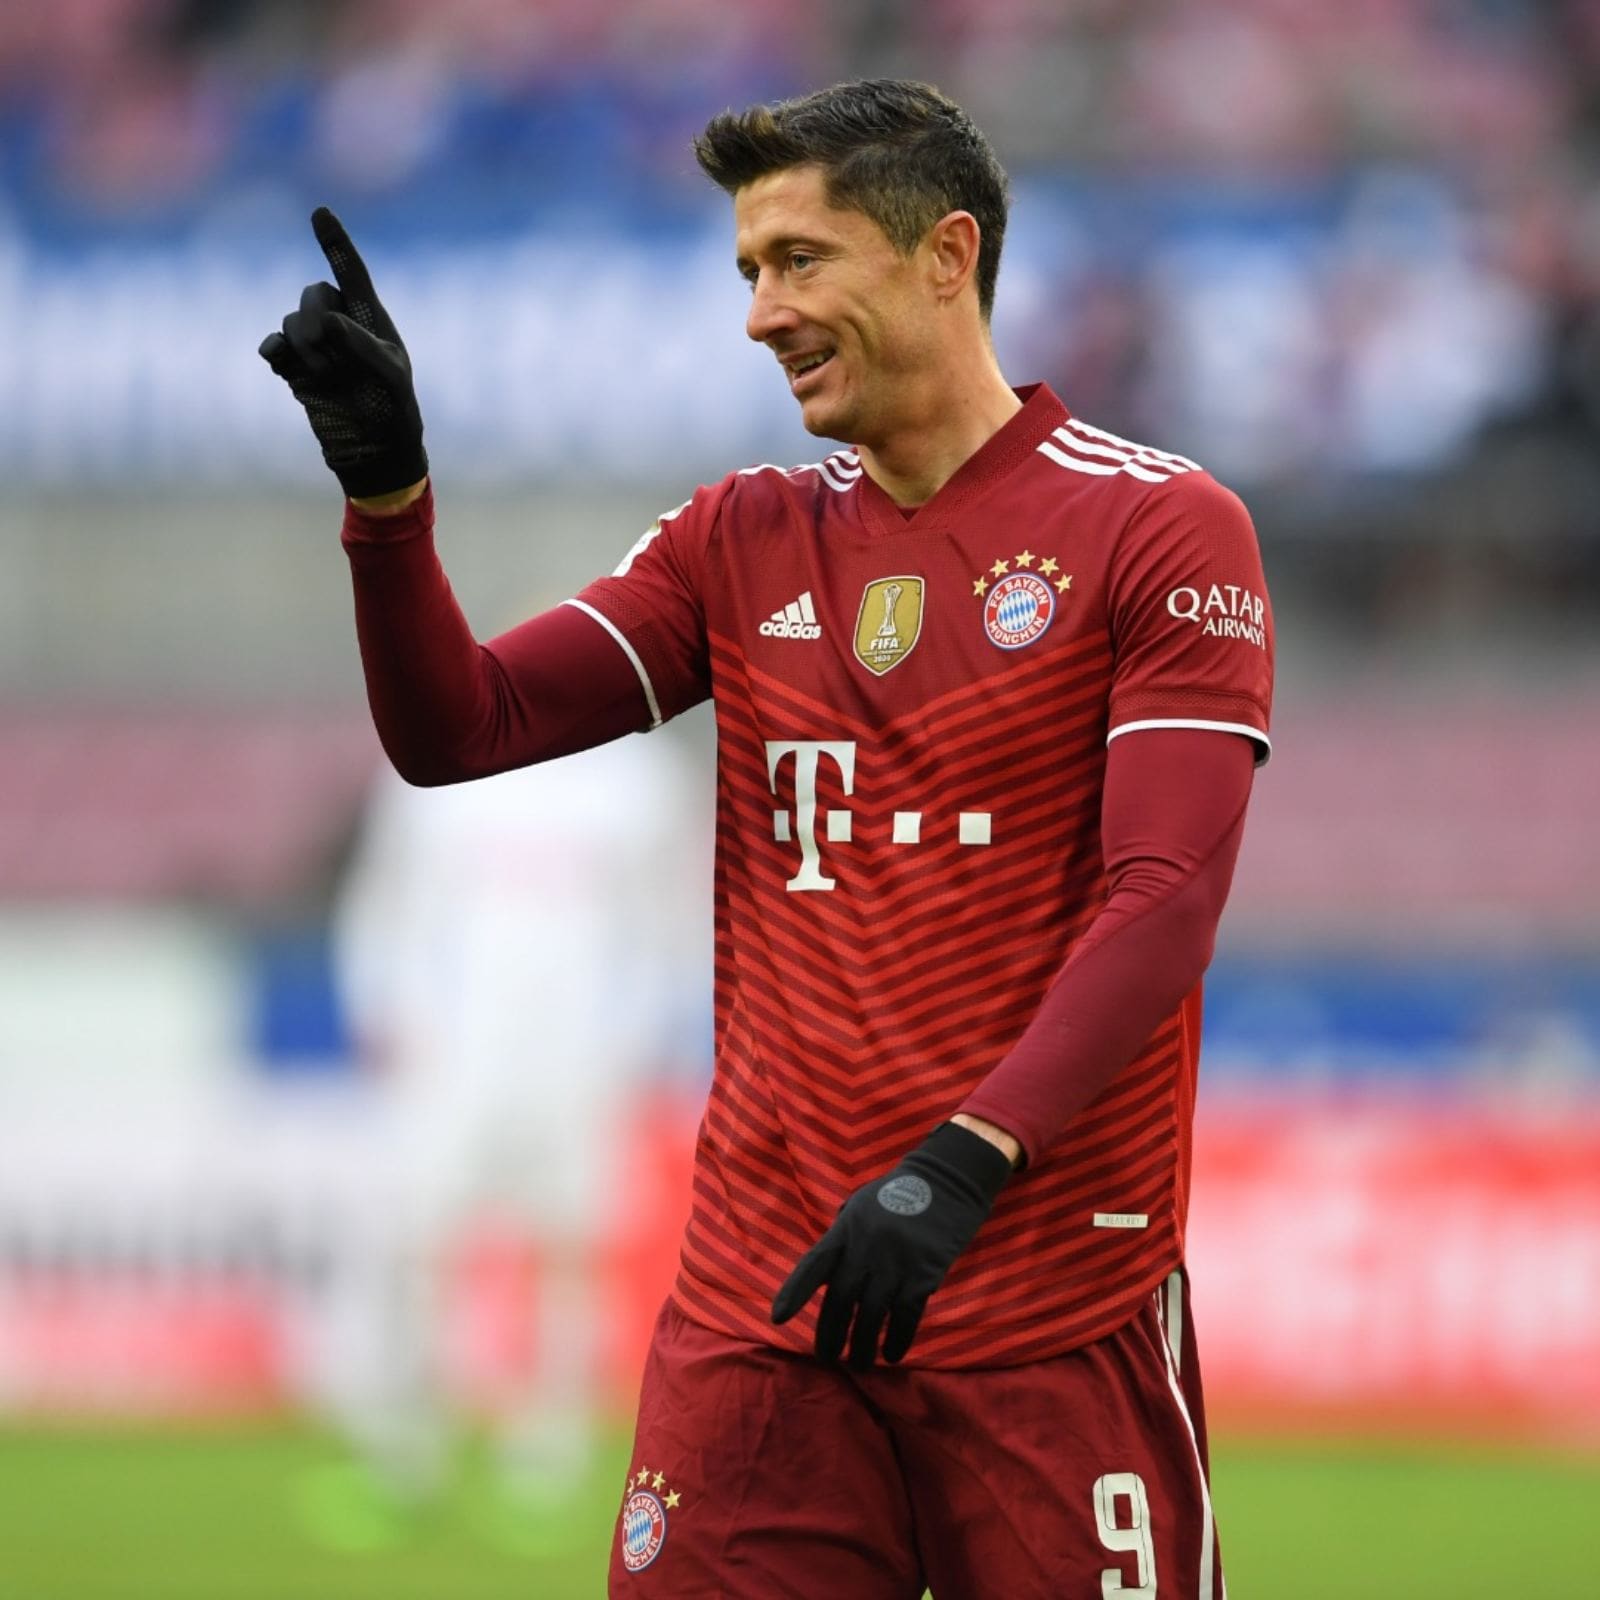 Did you know that? - Bayern Munich superstar Robert Lewandowski